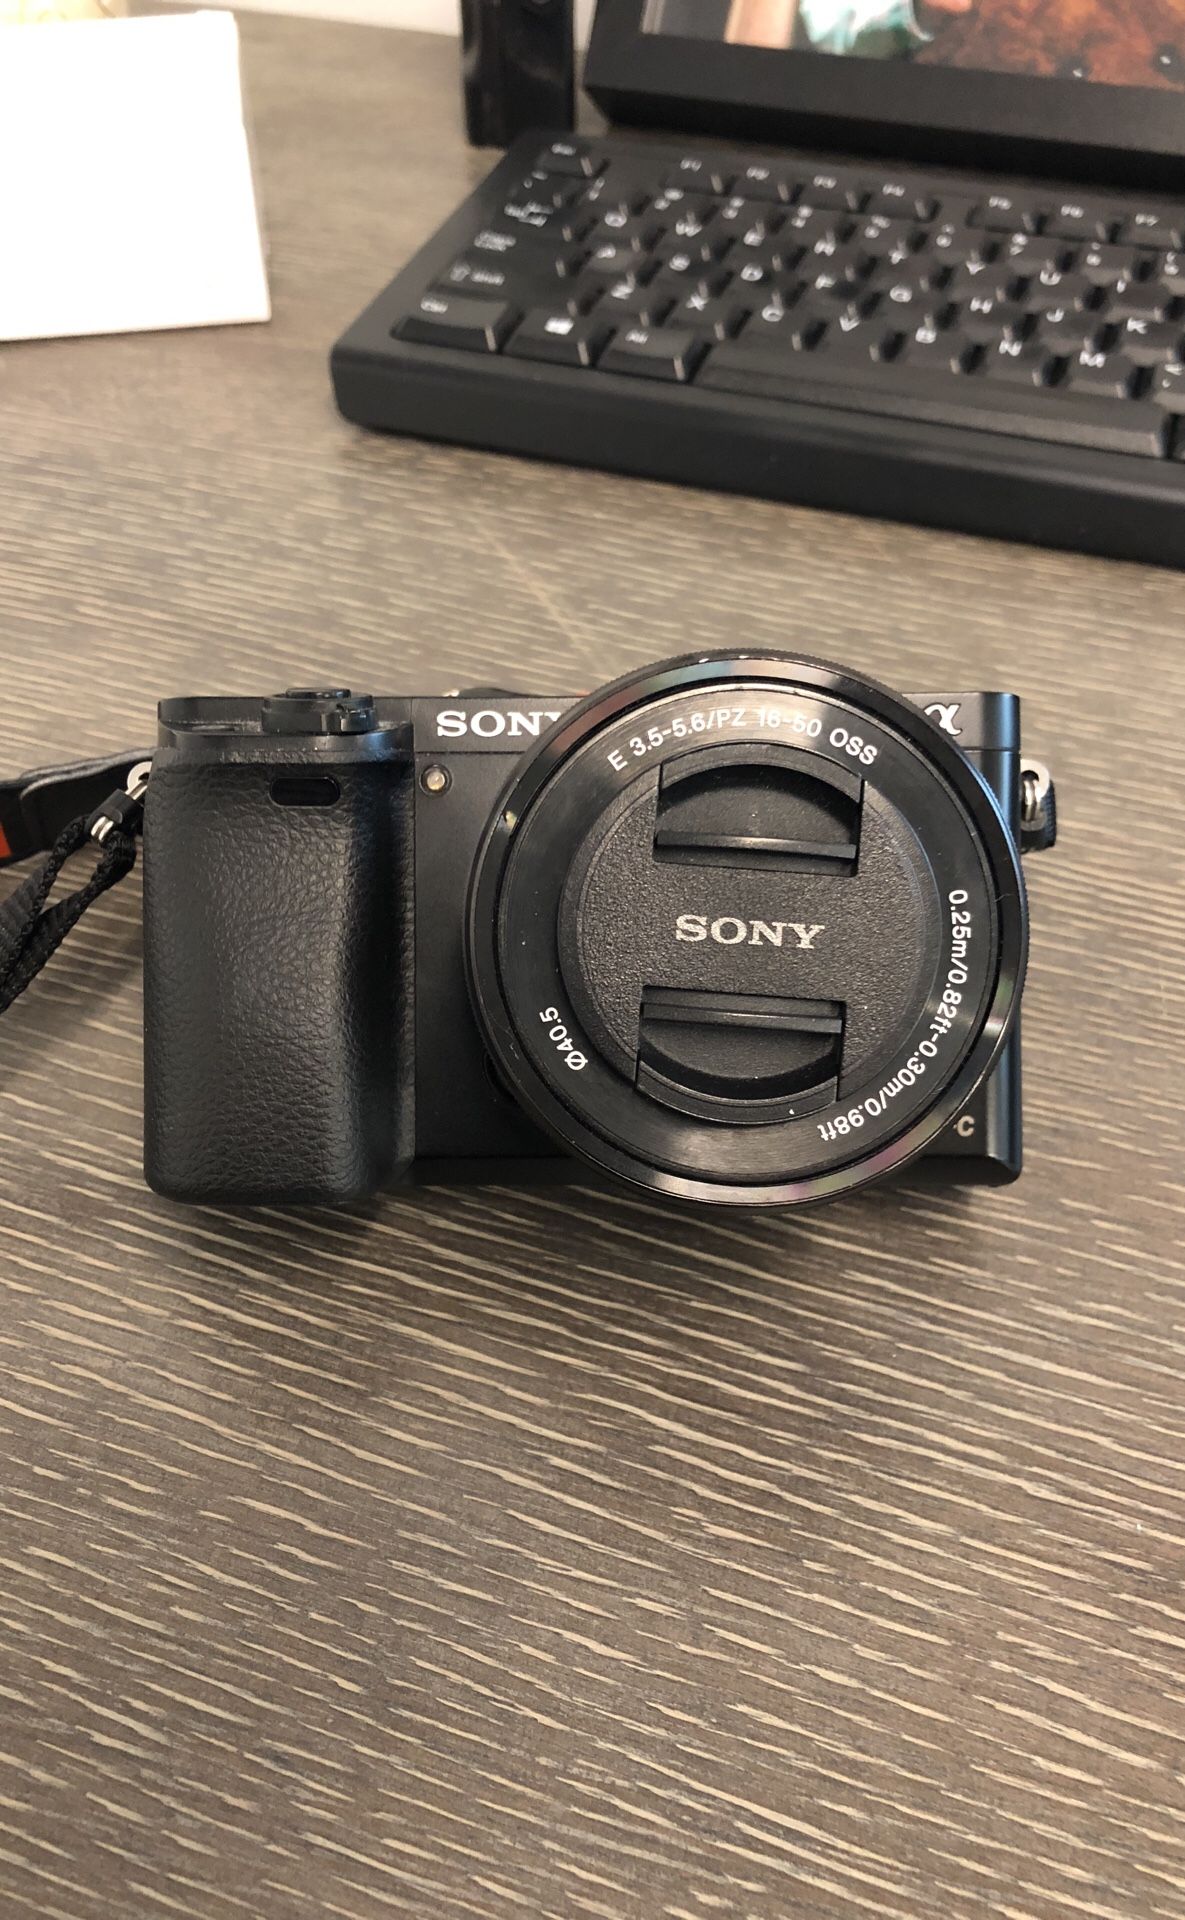 Sony a6000 mirrorless camera